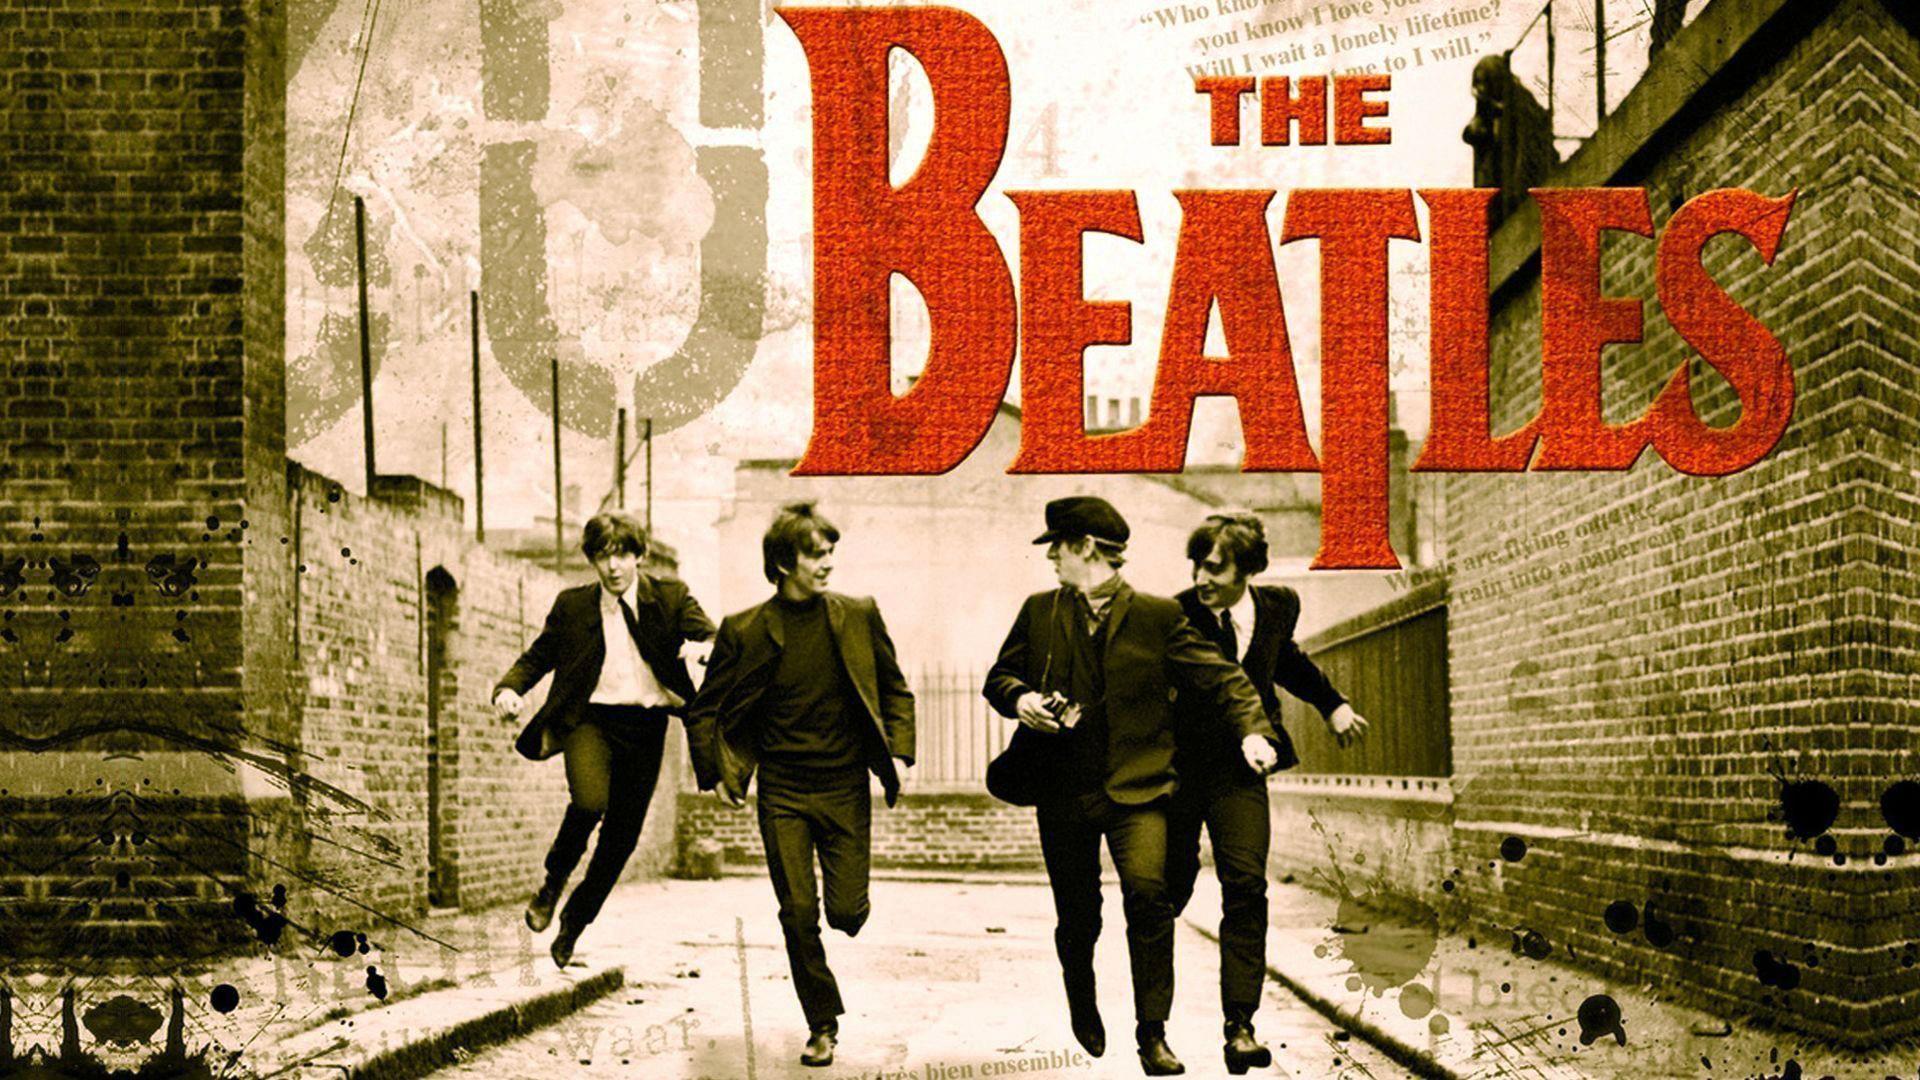 The Beatles HD picture. Album cover. Music desktop wallpaper